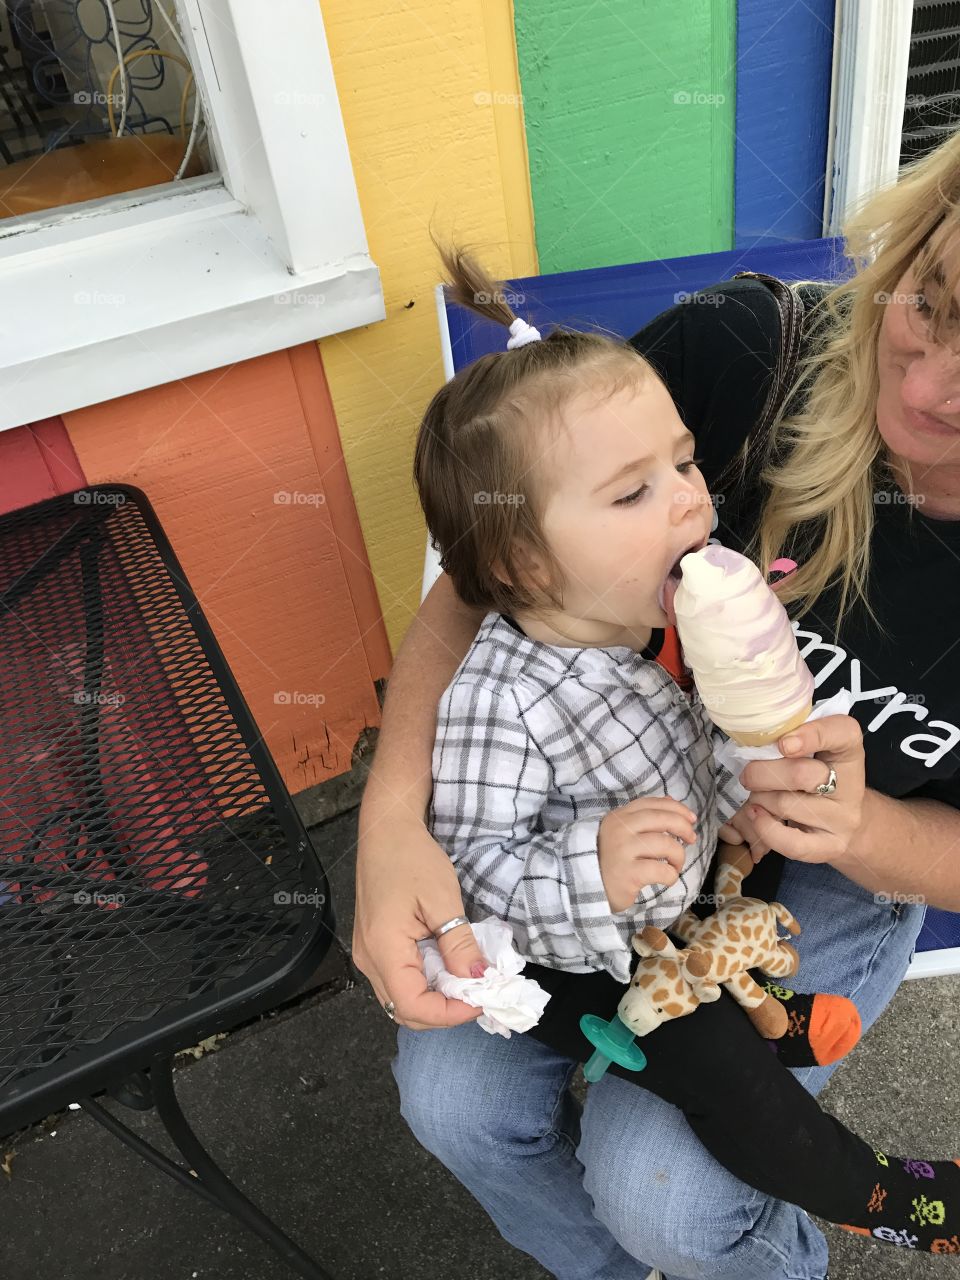 This ice cream cone is bigger than me!